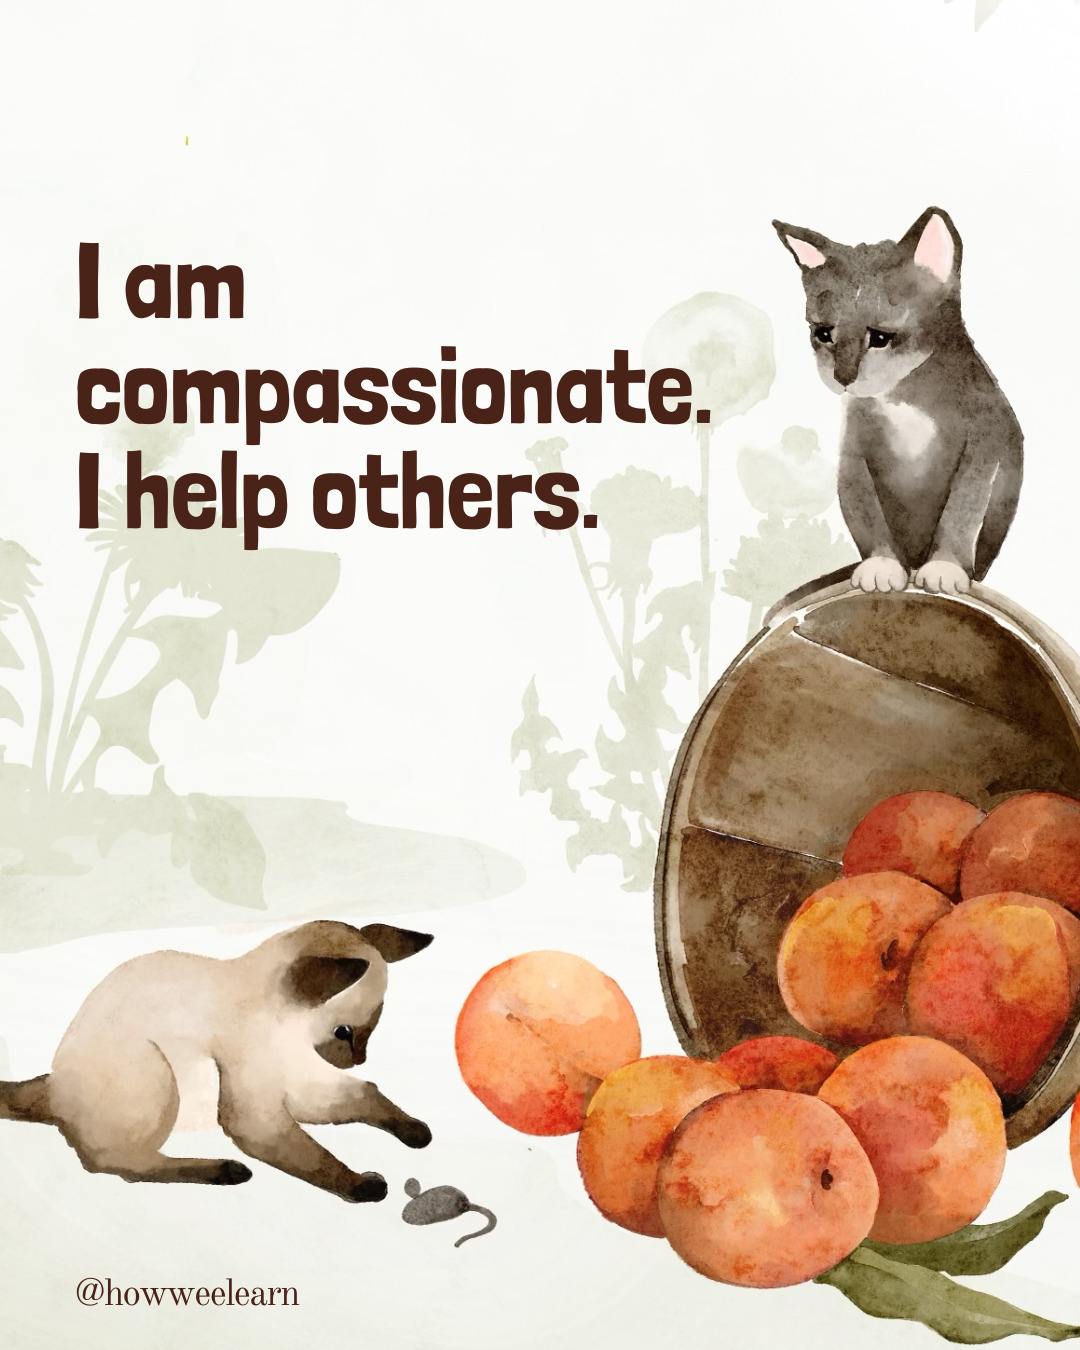 I am compassionate. I help others.